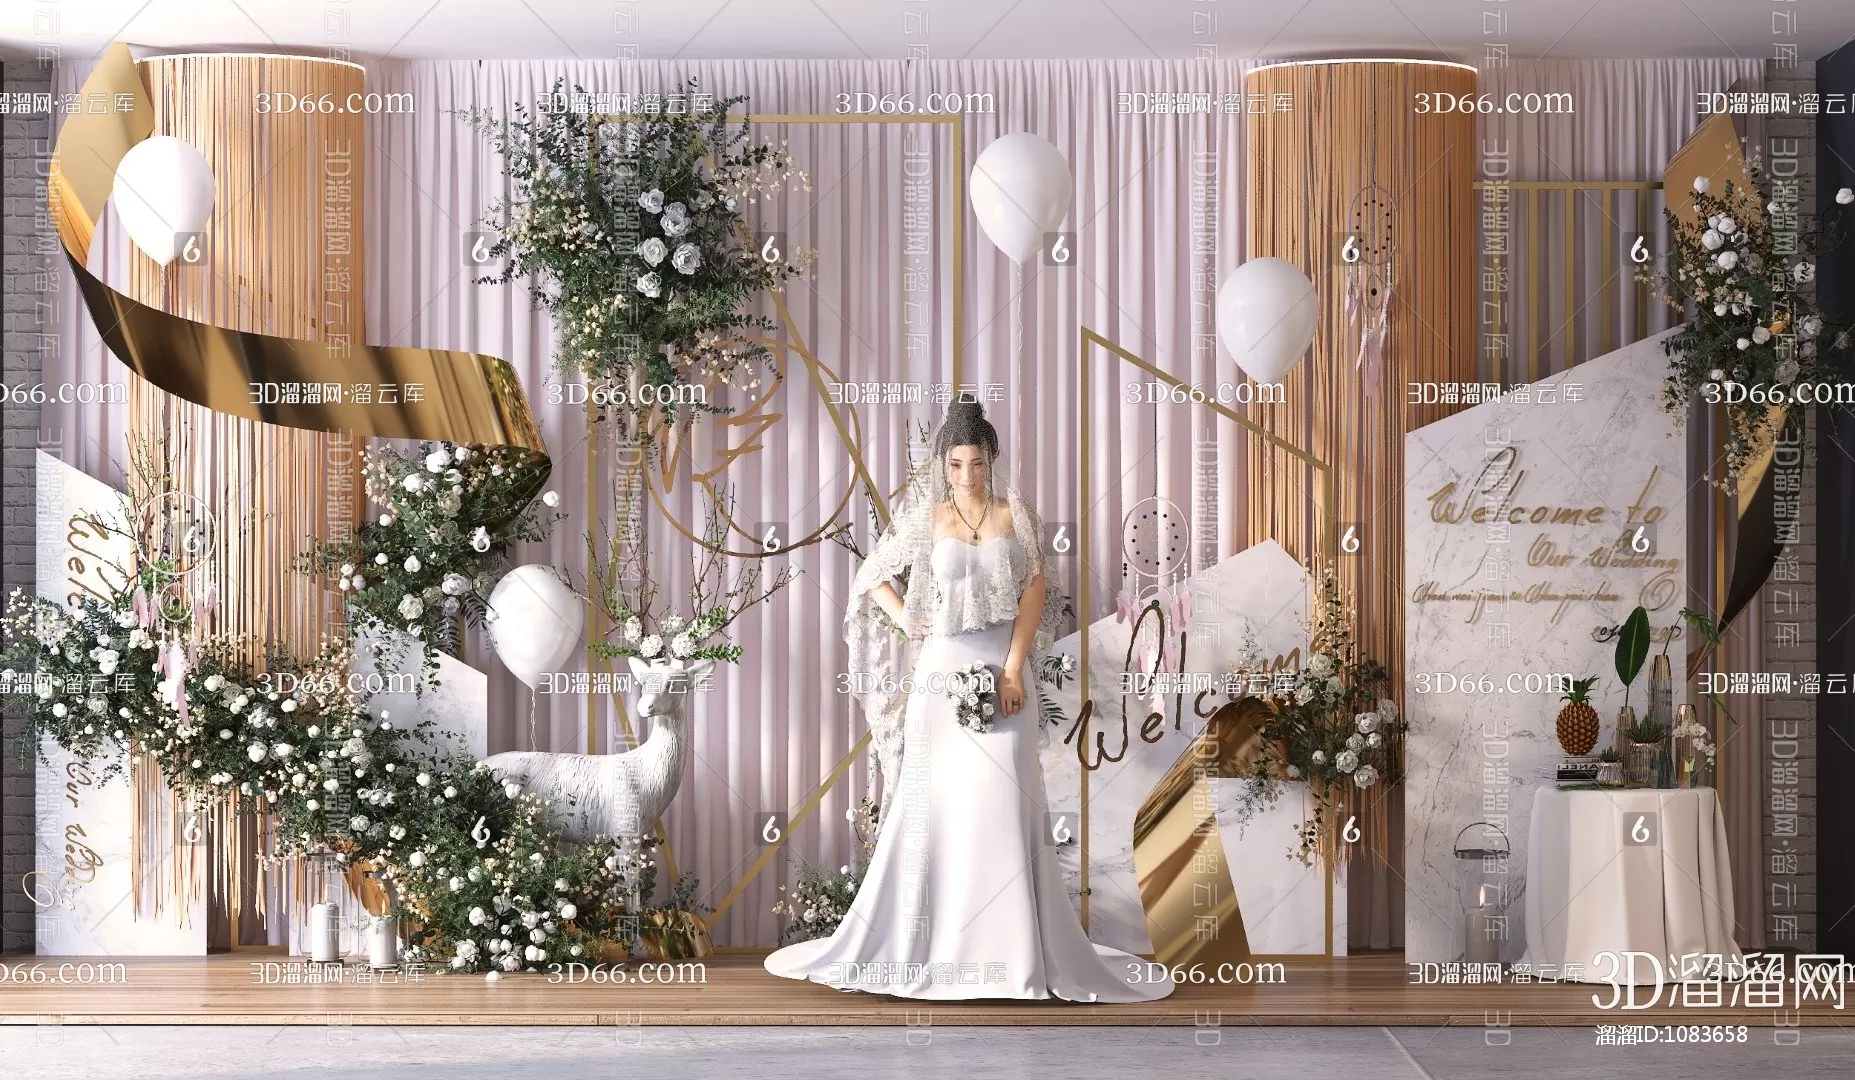 DECORATION – WEDDING 3D MODELS – 014